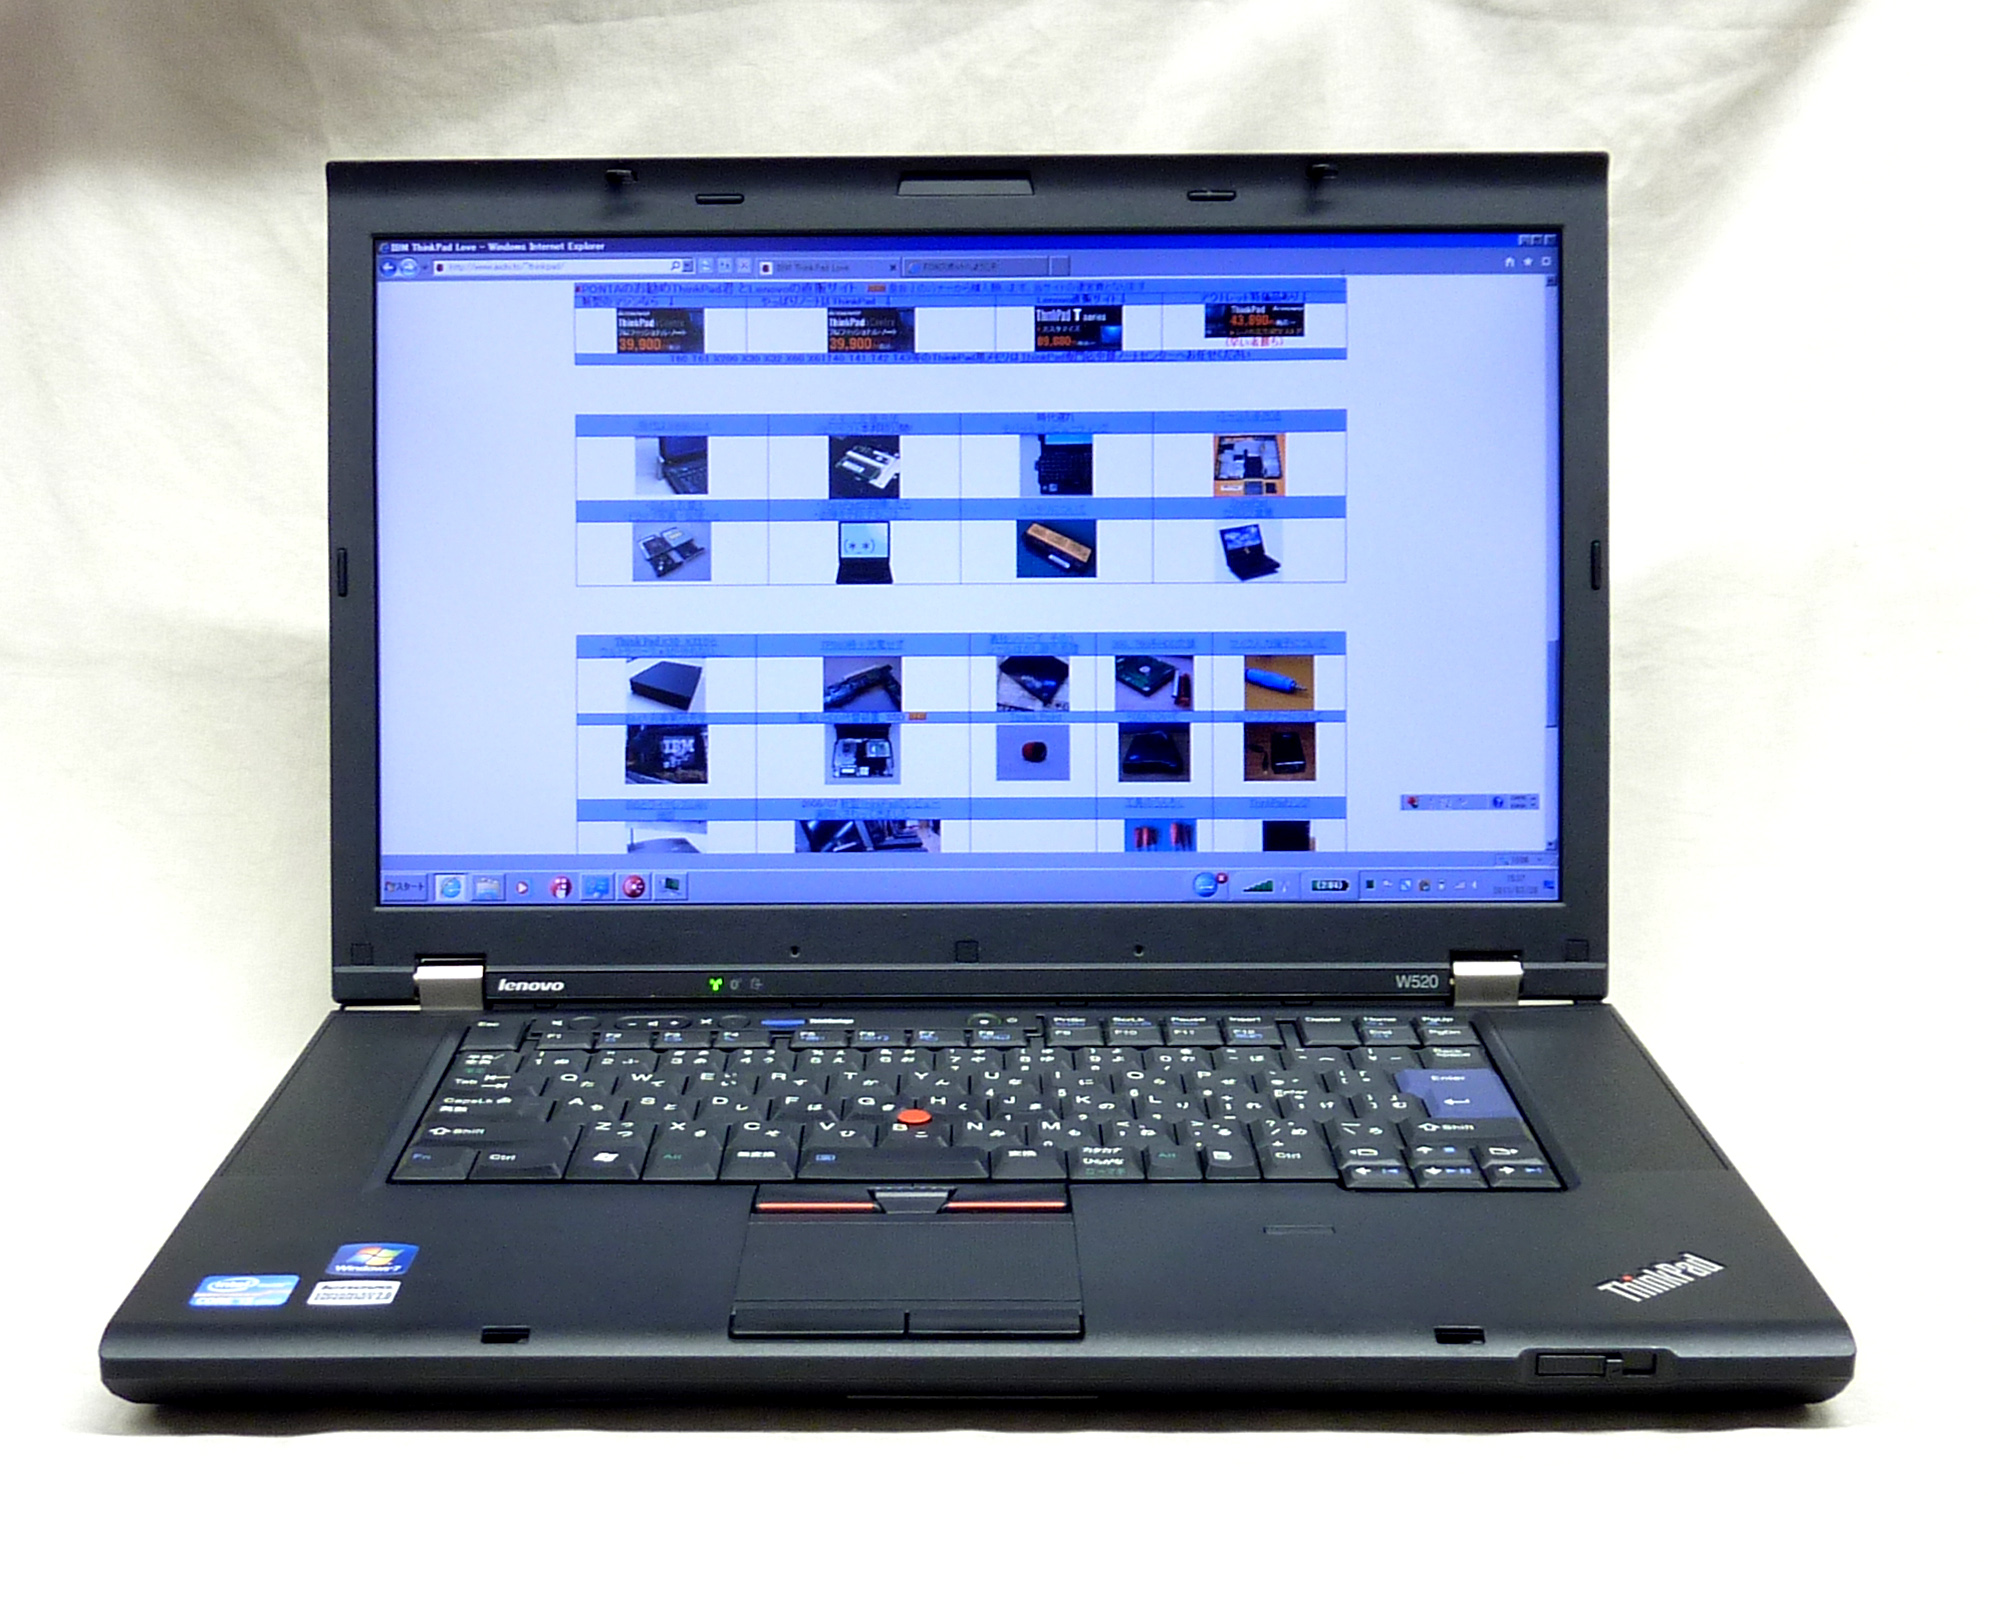 ThinkPad W520 【ノートでデスクトップ並Spec】4282PZ1購入時期